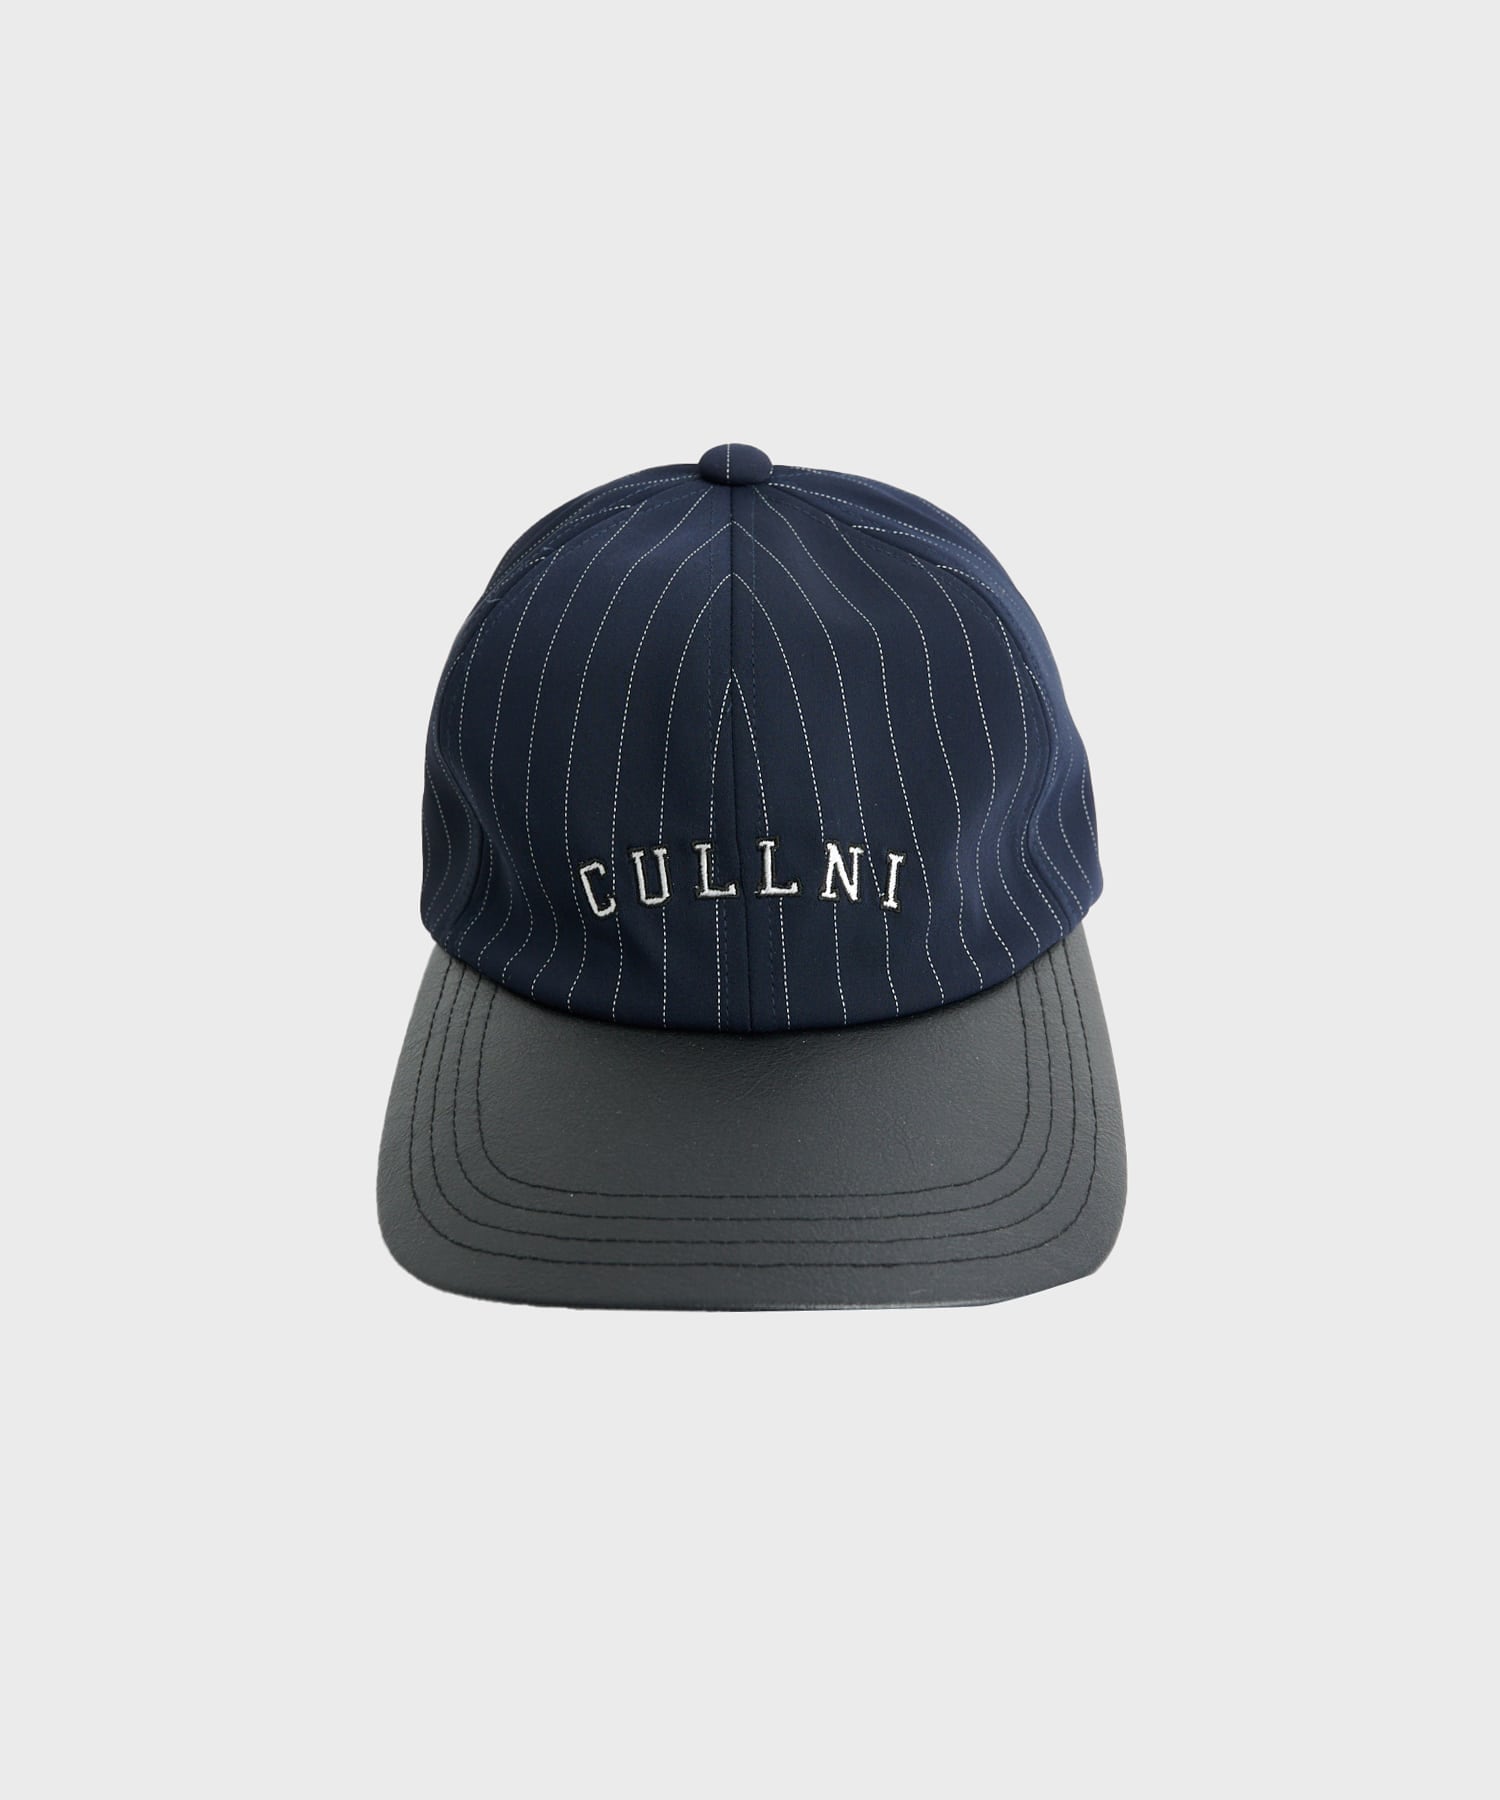 〈別注〉COLLEGE CAP